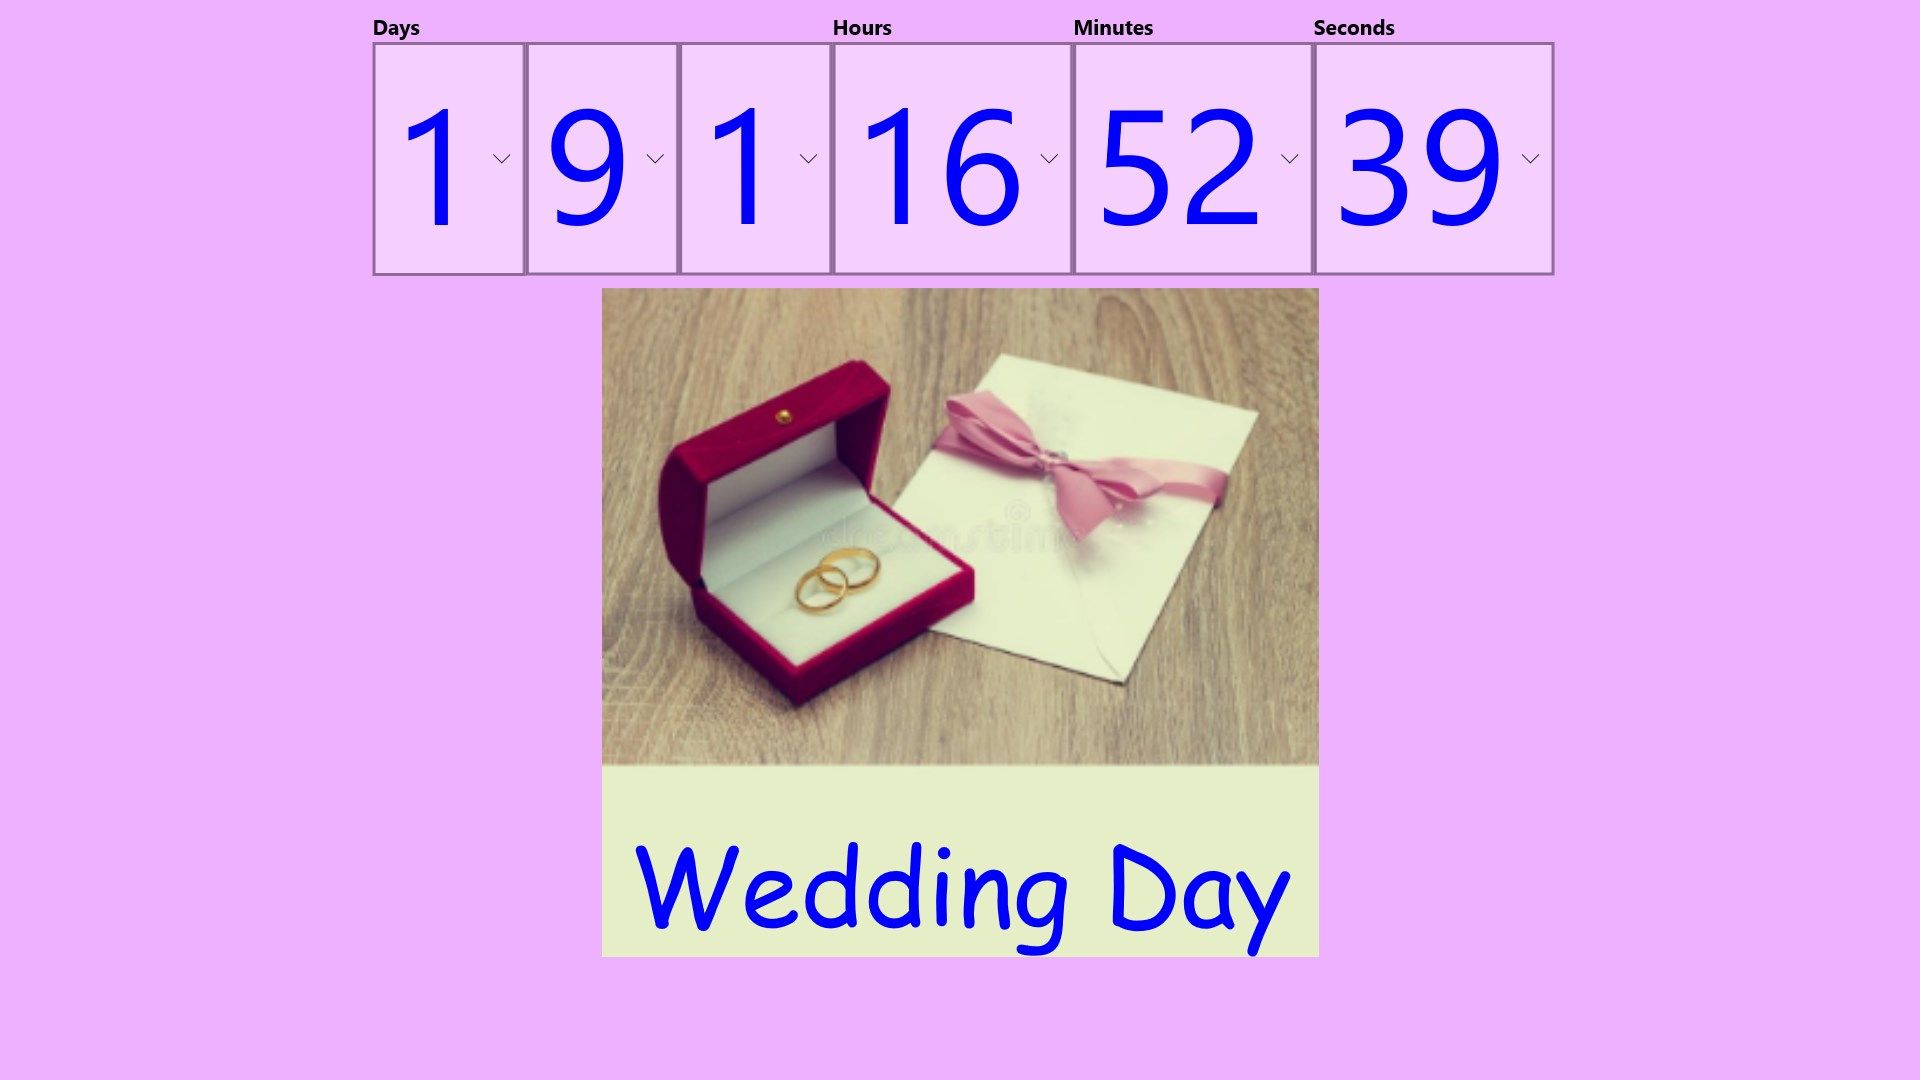 Countdown to life events; weddings, birthdays, retirement, vacations etc.